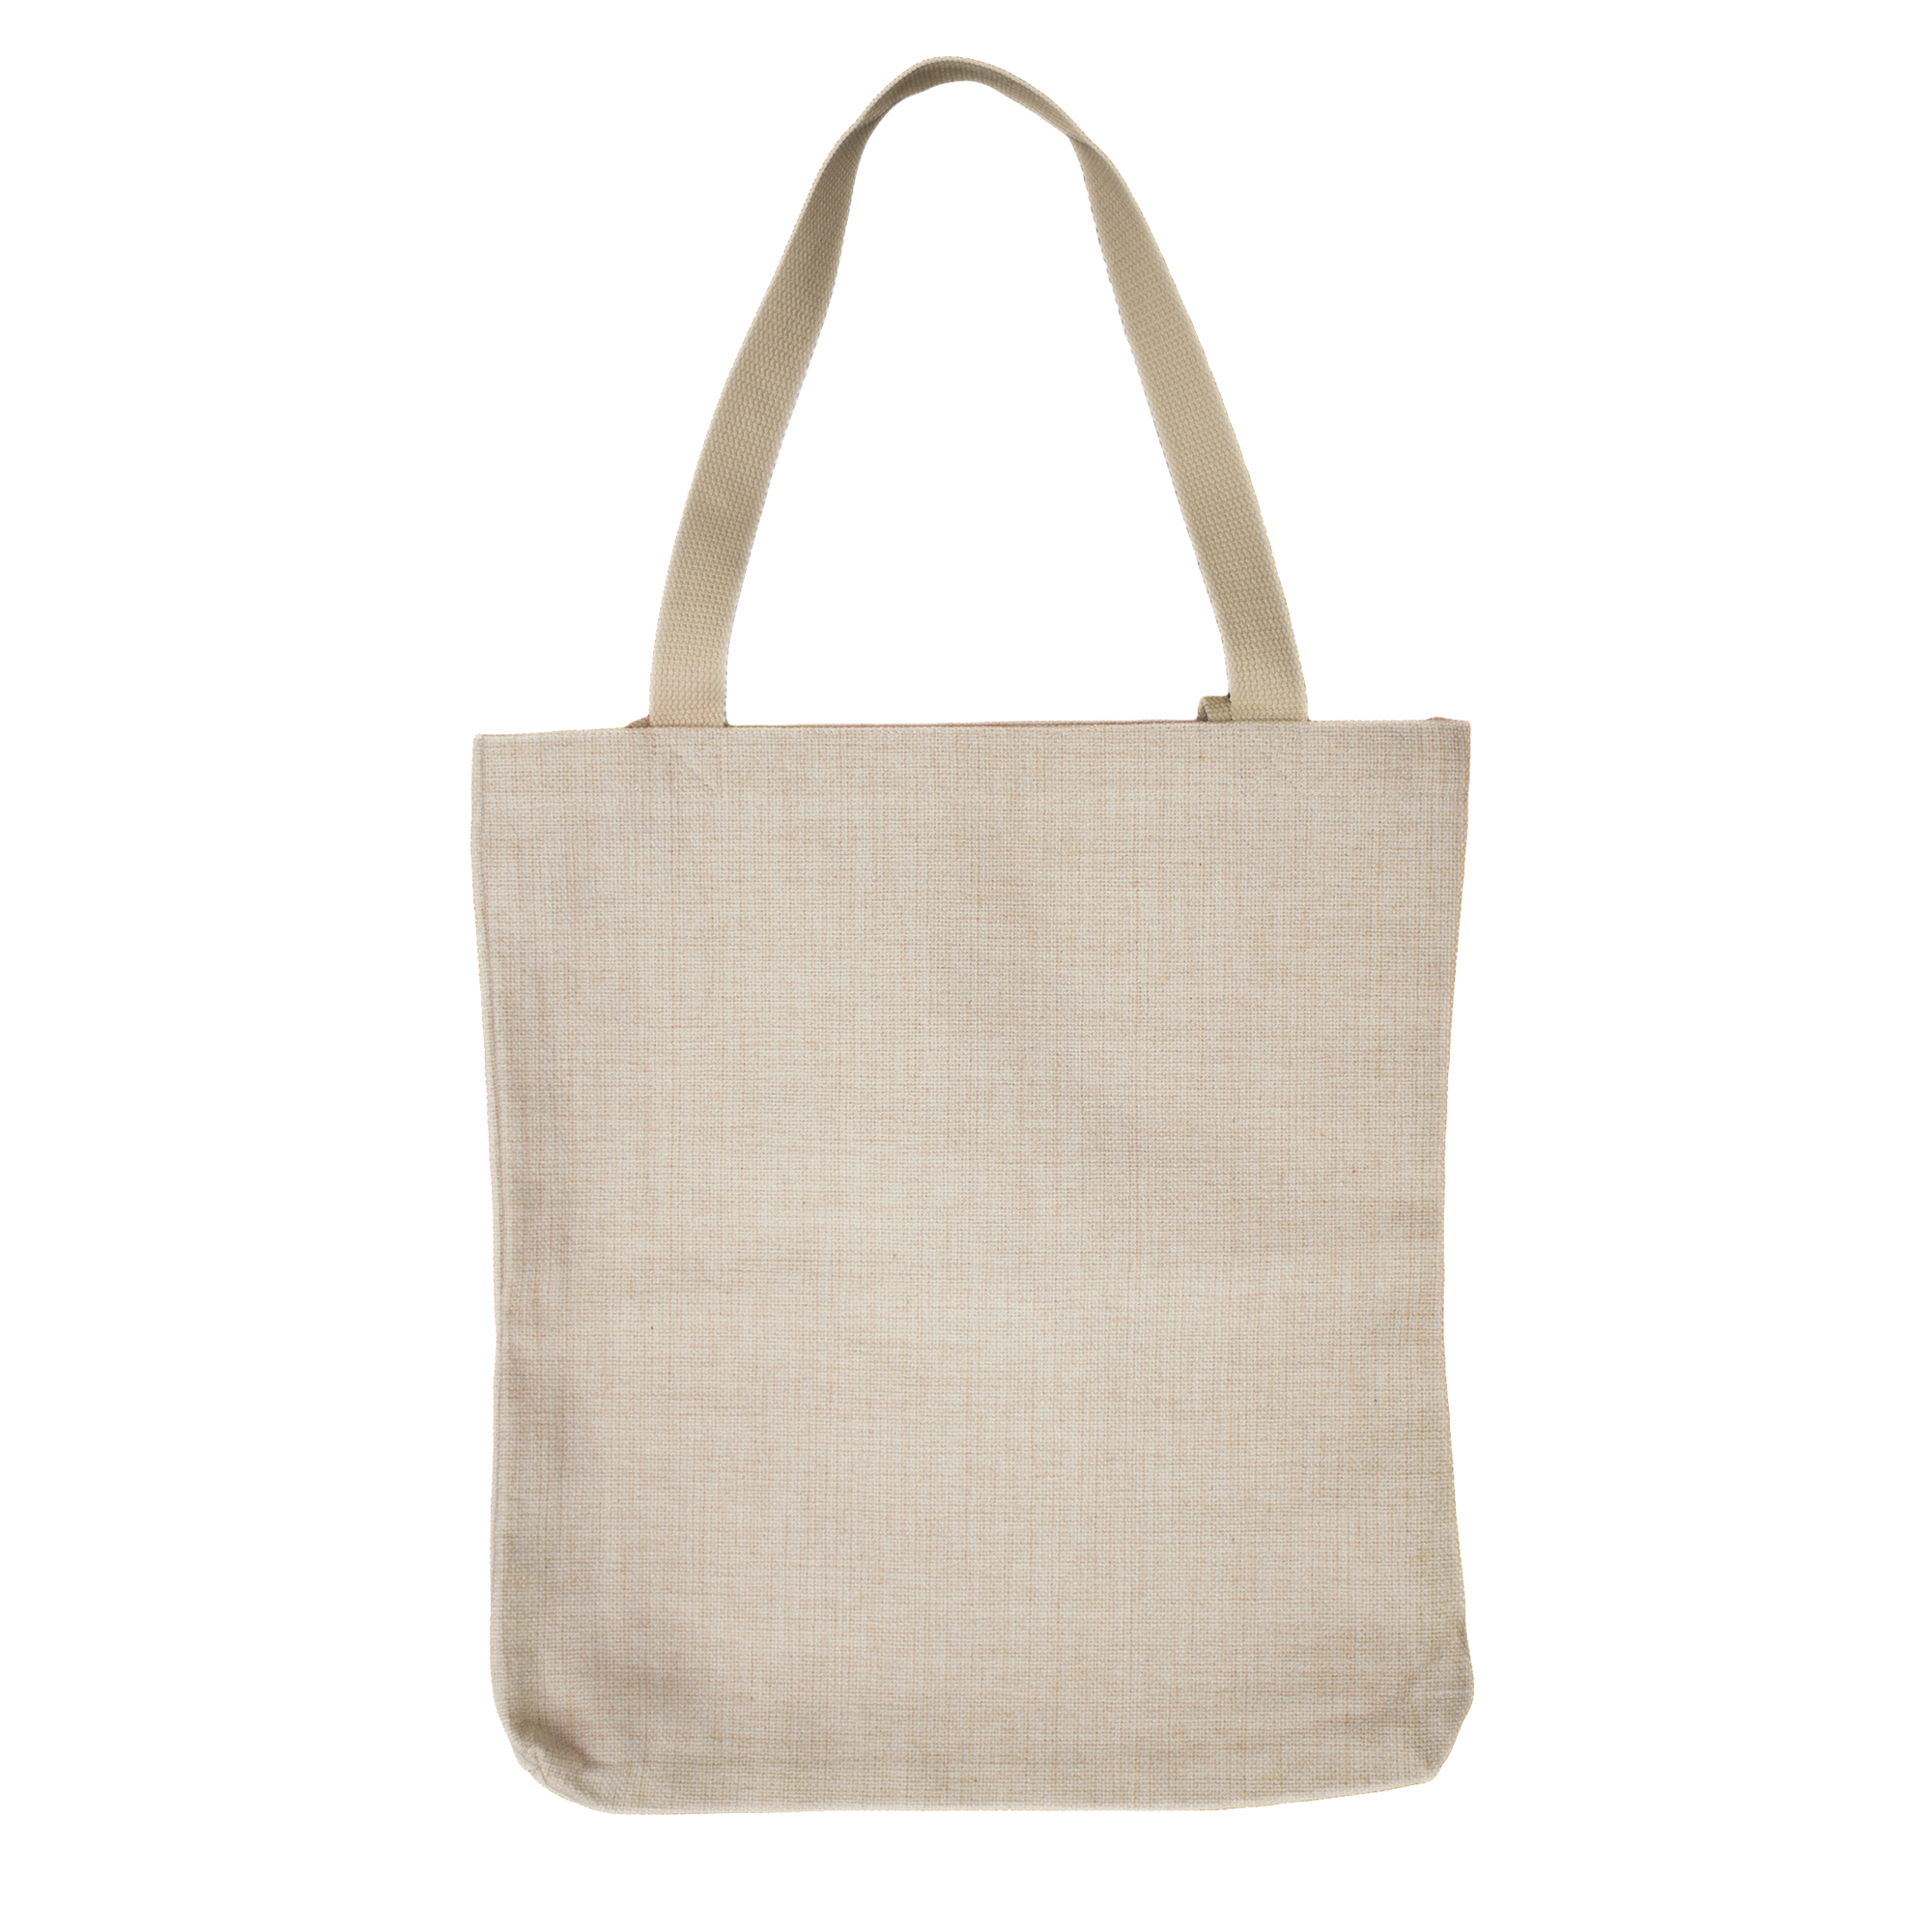 Blank/Customizable Small Linen Tote Bag